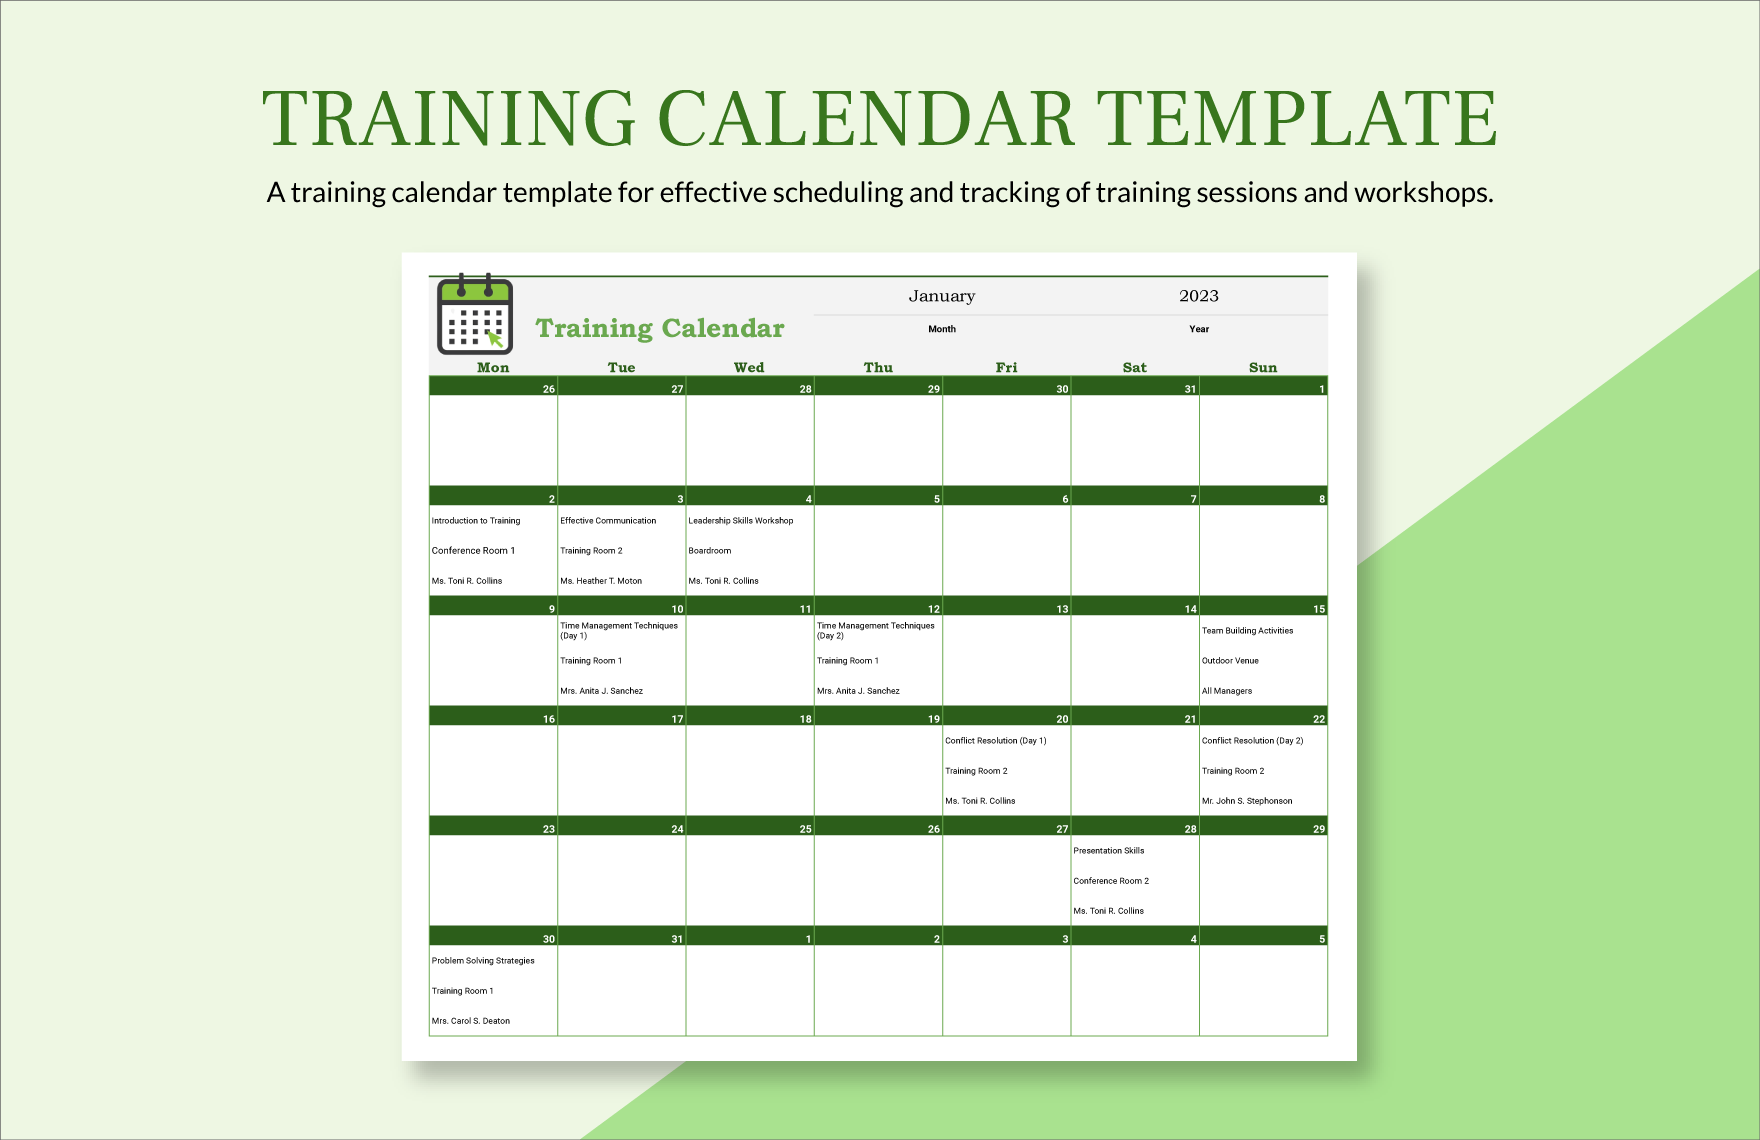 Training Calendar Template Download in Word, Google Docs, Excel